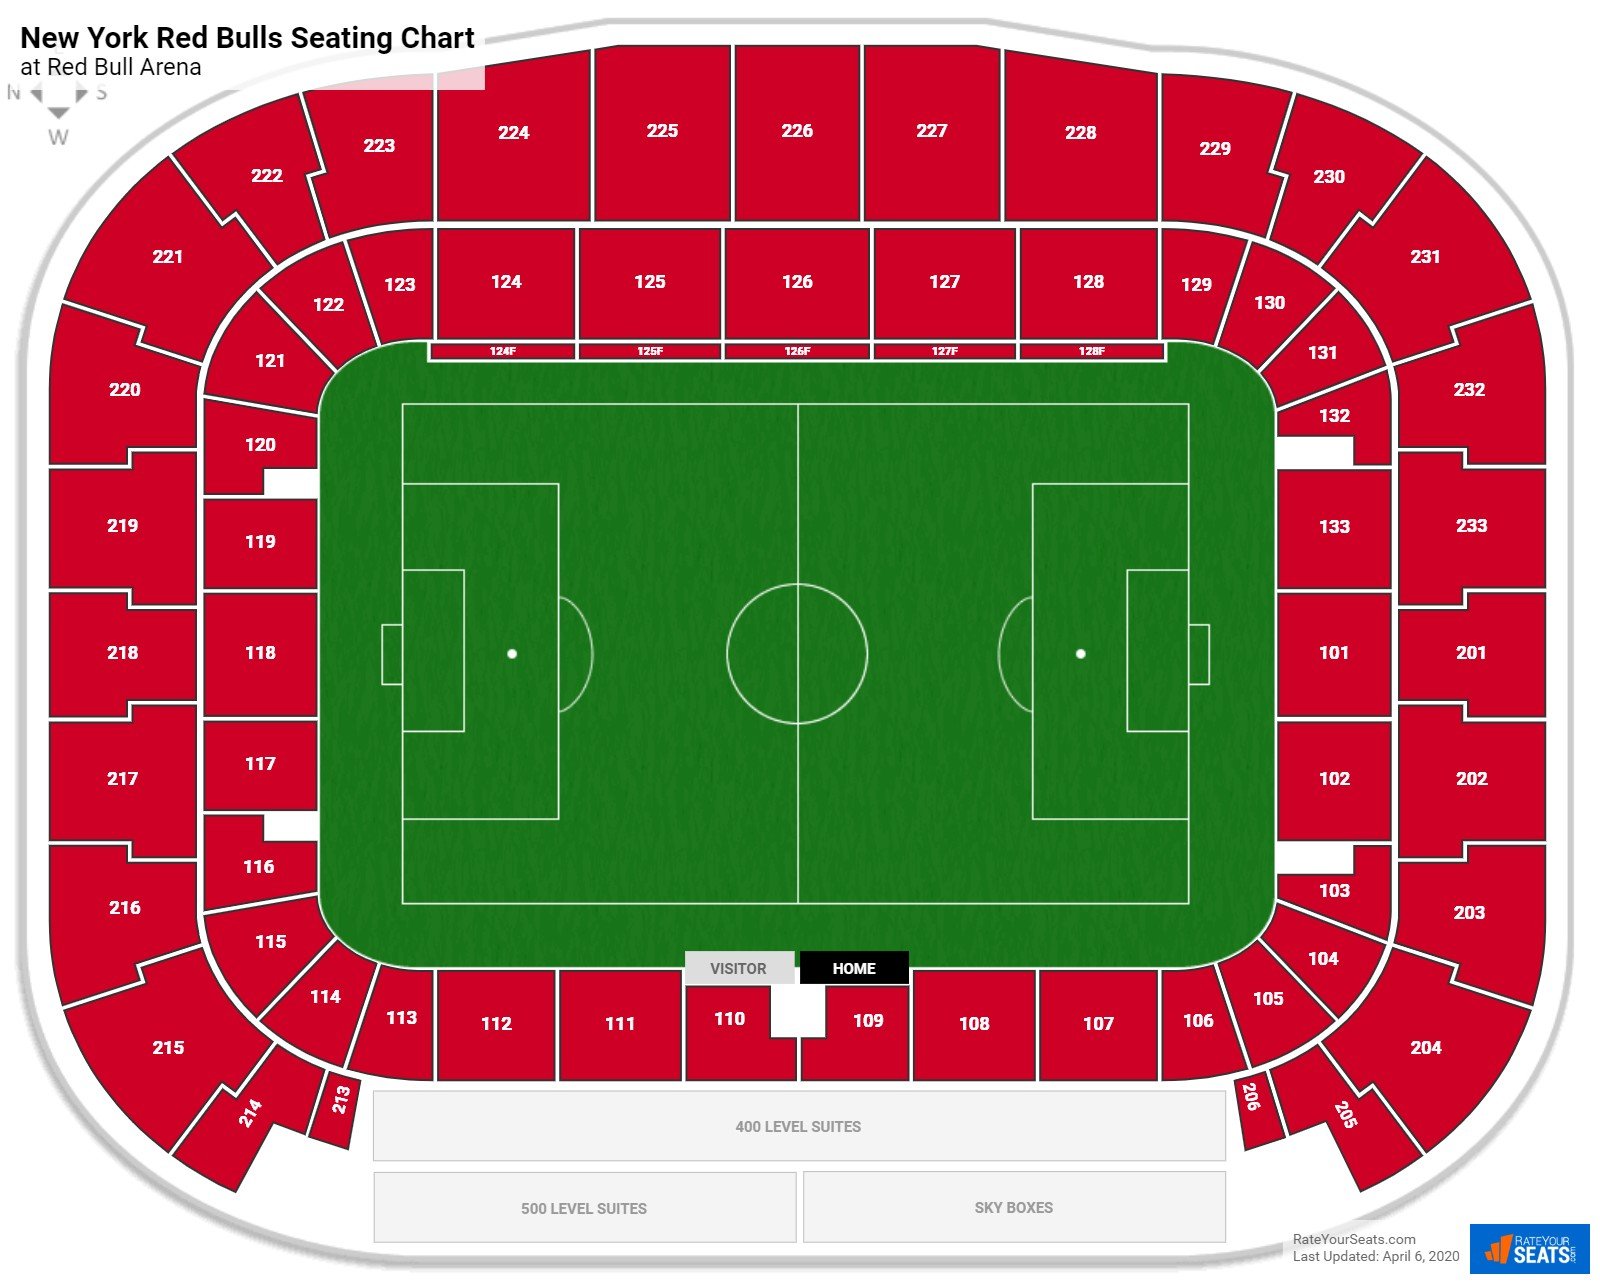 Sinds stout Niet ingewikkeld Red Bull Arena Seating Chart - RateYourSeats.com